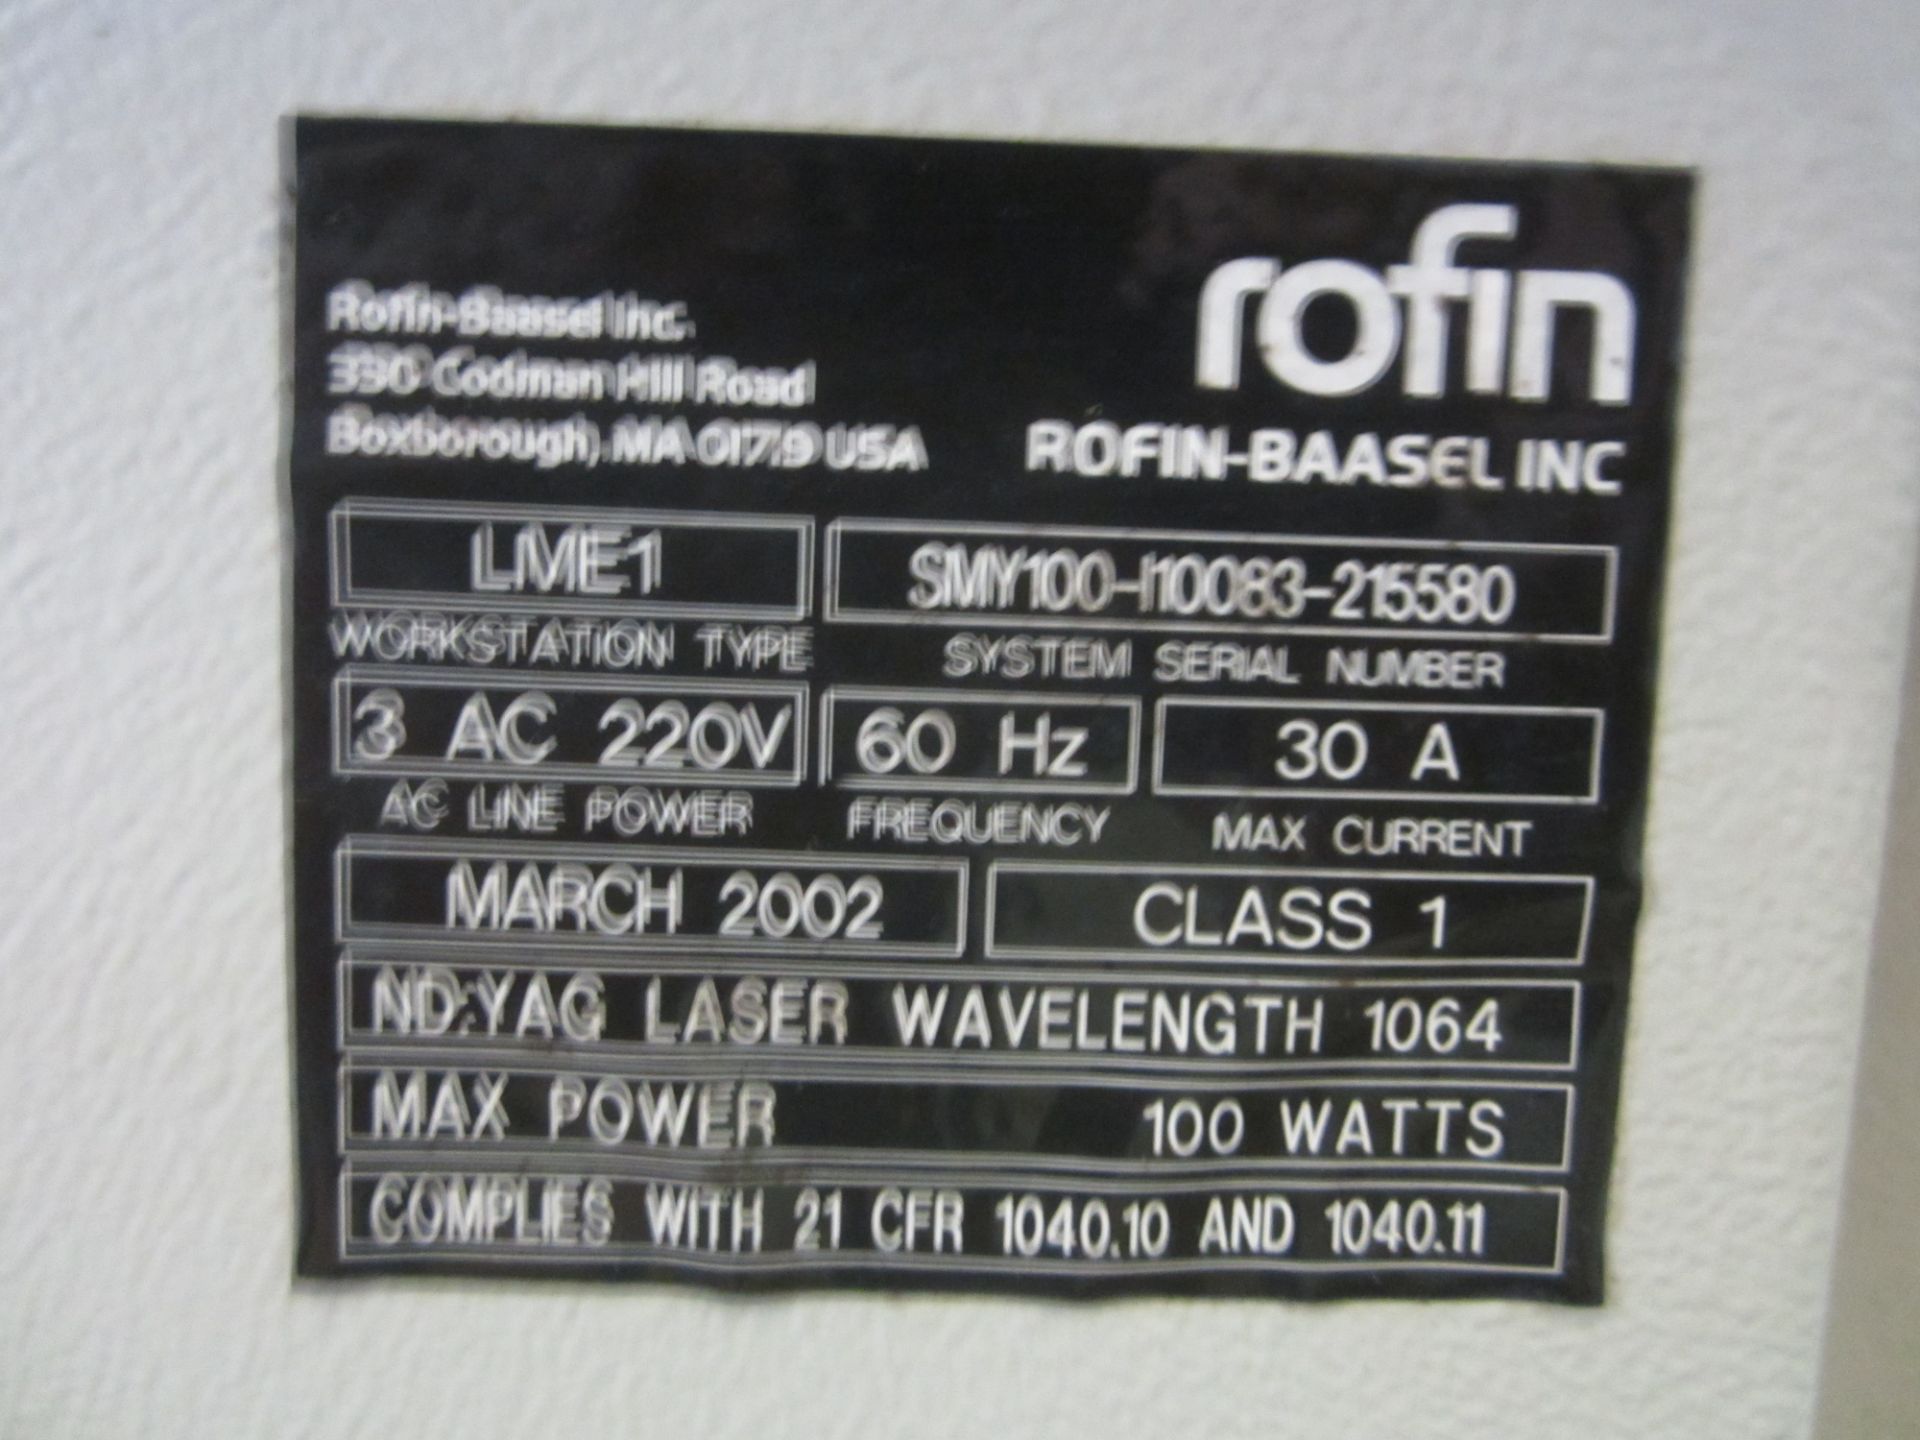 Rofin Model LME-1 Laser Parts Marker, 100 Watt, s/n SMY100-110063-215660 - Image 8 of 8